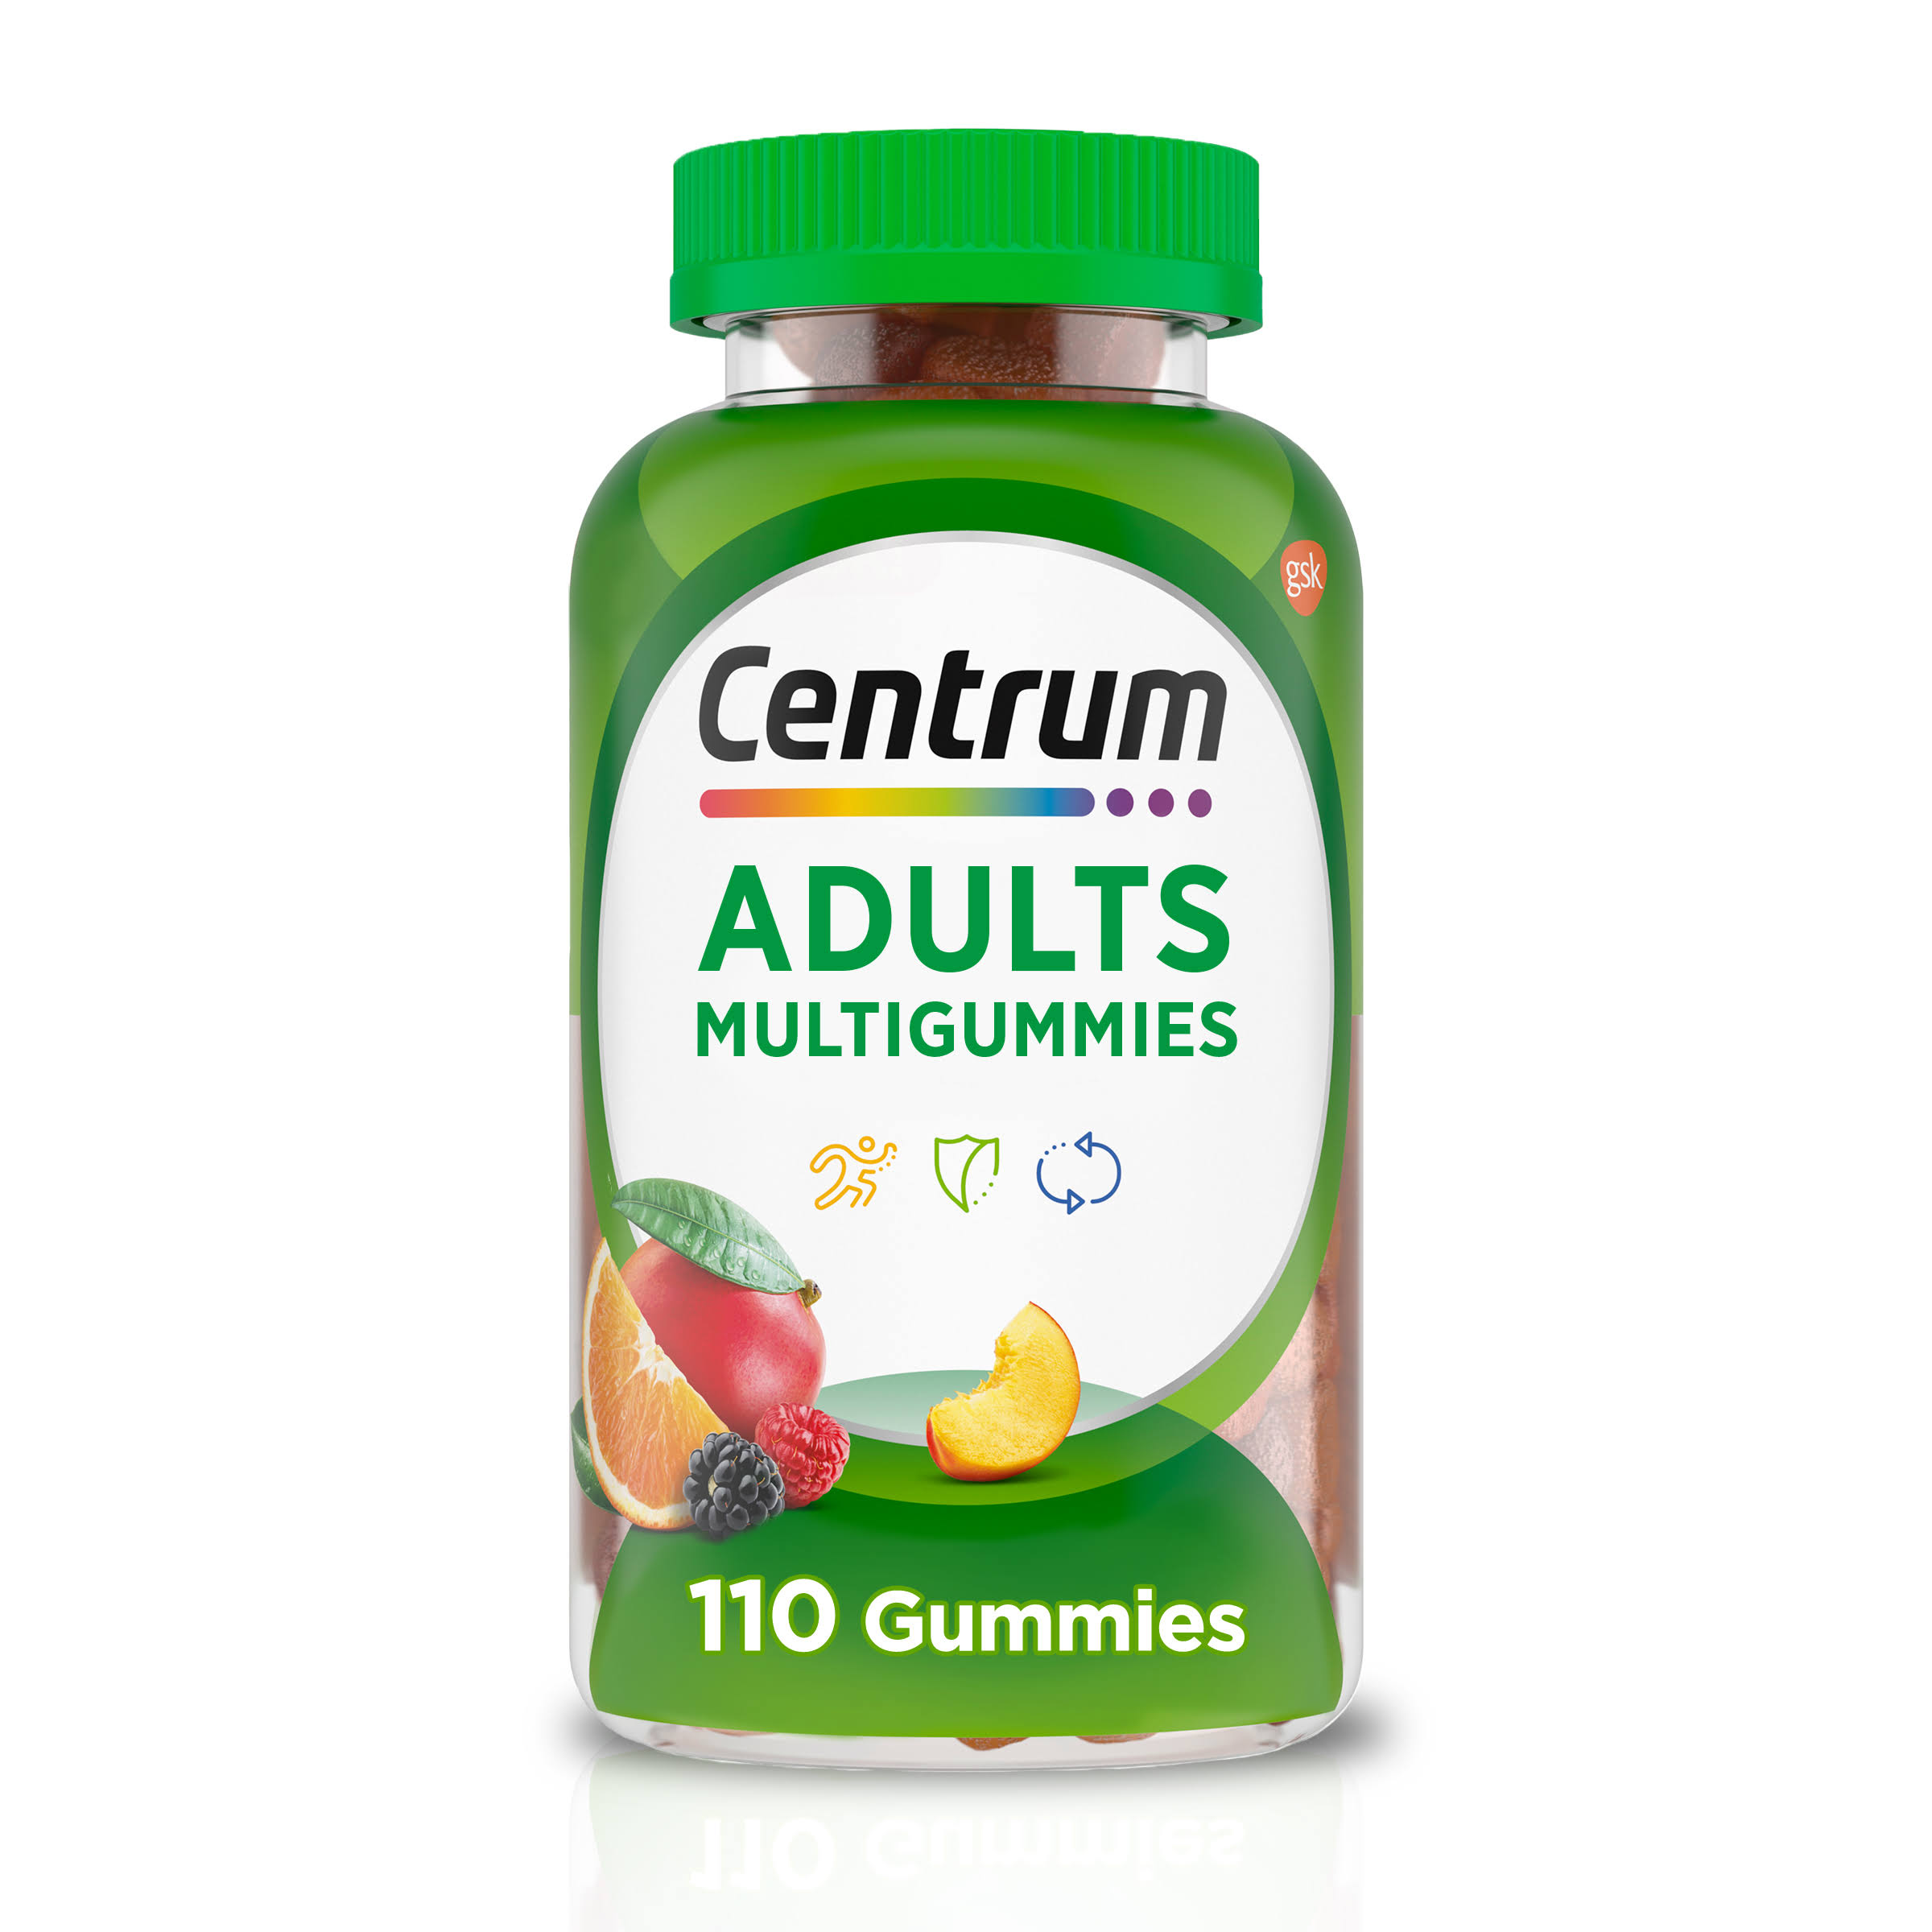 Centrum Multigummies Gummy Multivitamin for Adults